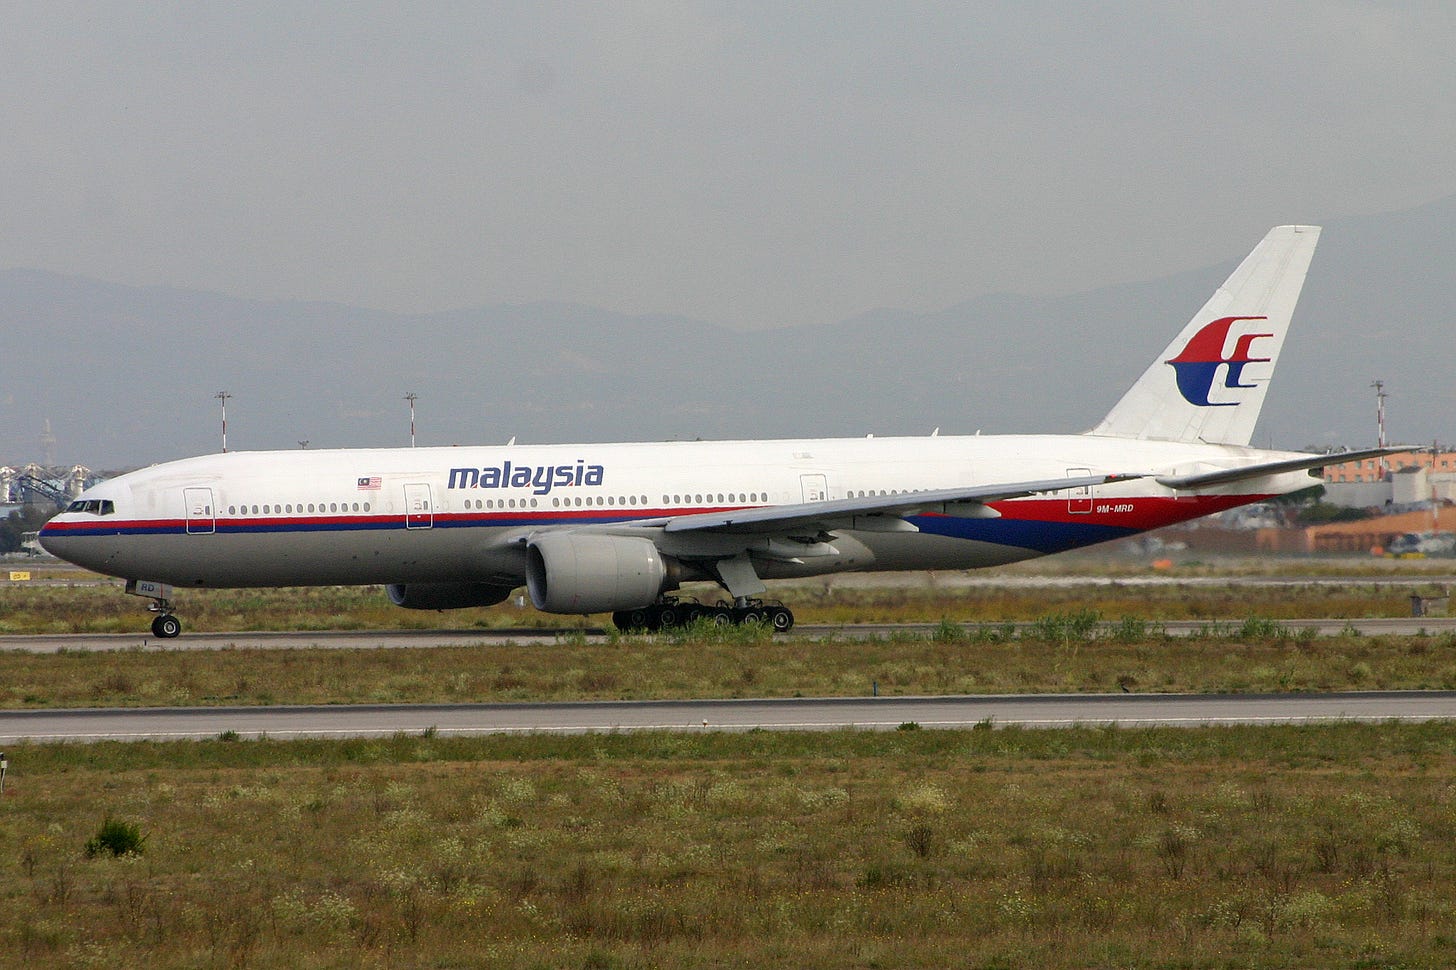 Malaysia Airlines Flight 17 - Wikipedia